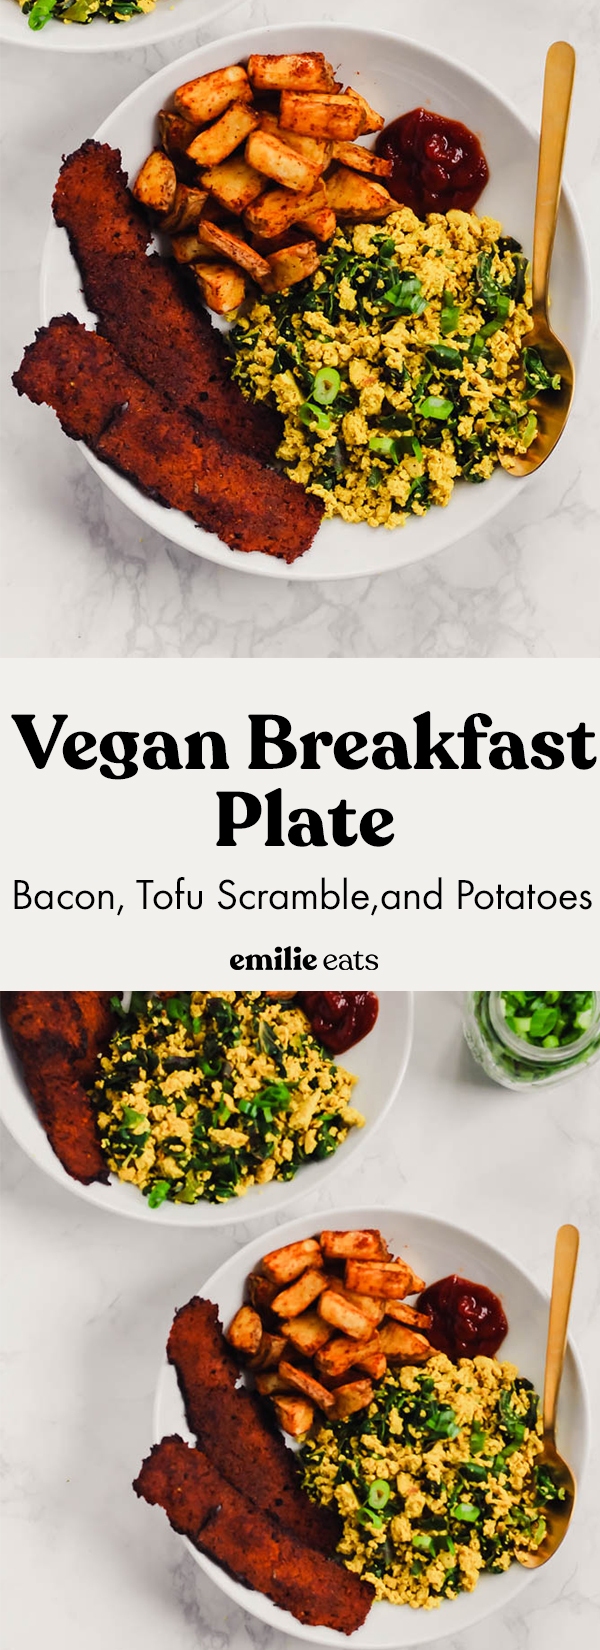 Vegan Breakfast Plate: Bacon, Tofu Scramble, and Potatoes – Emilie Eats